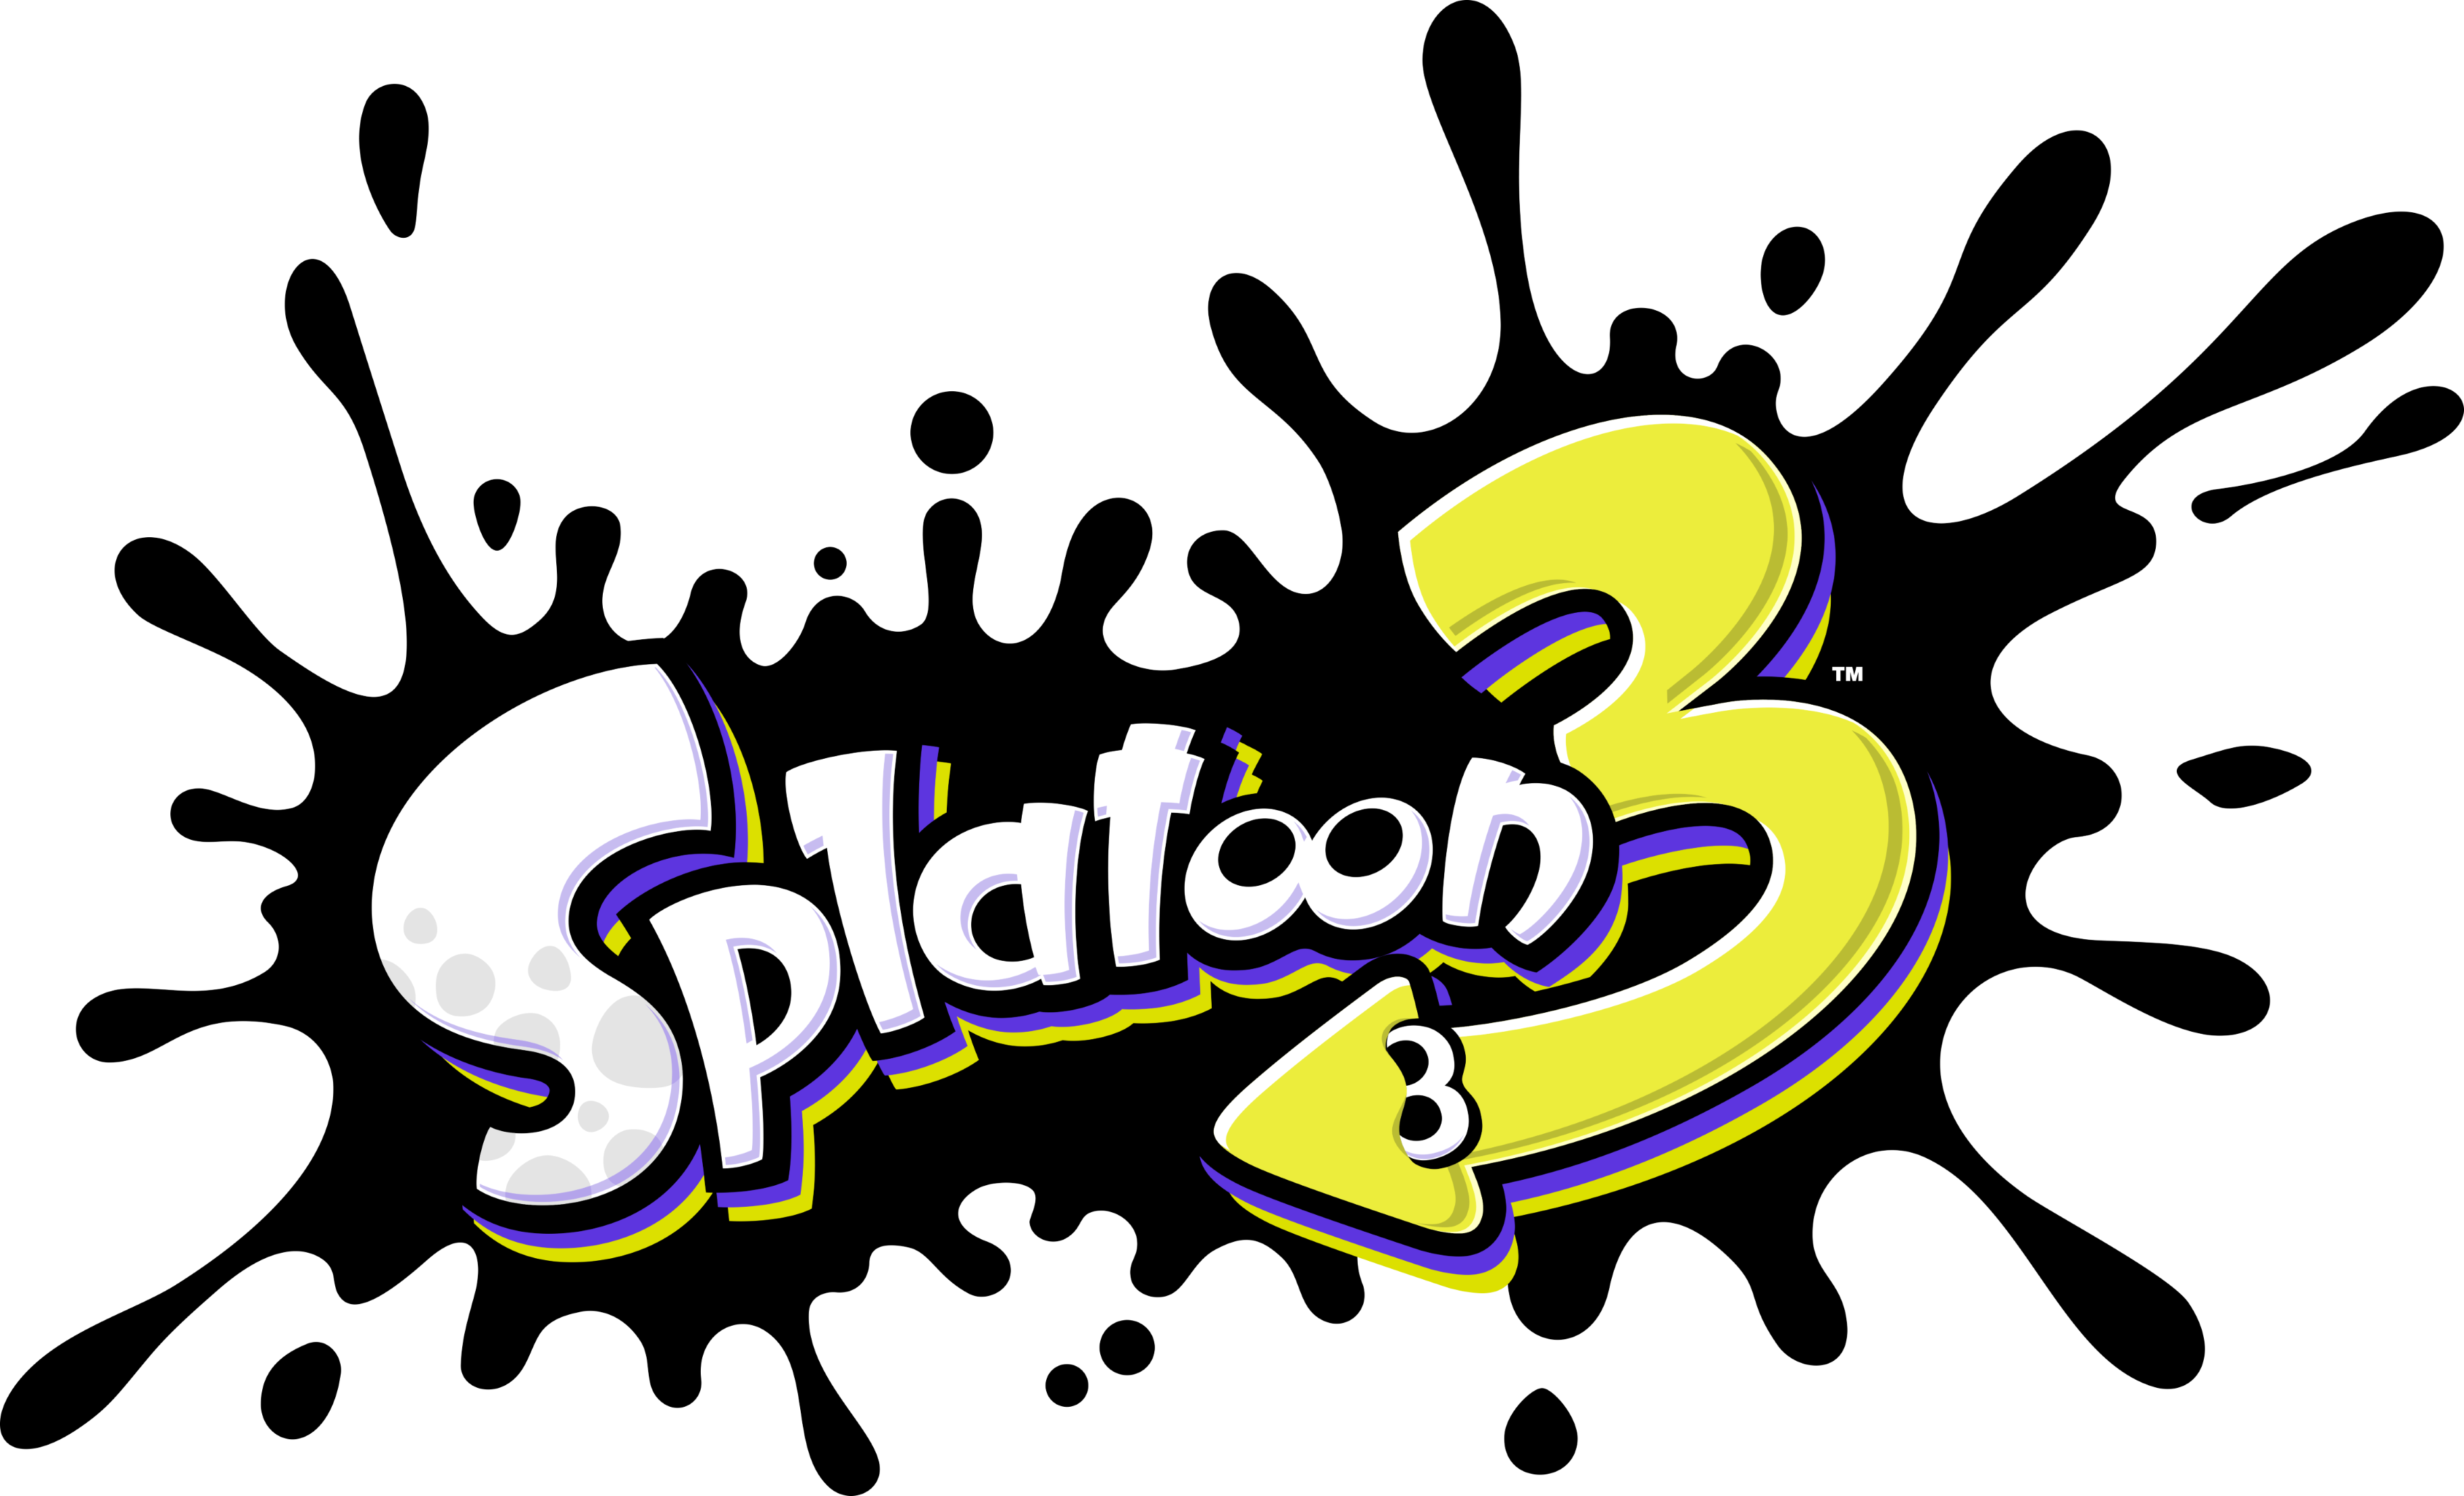 Splatoon 3 side order. Splatoon лого. Splatoon 3. Сплатун 3 лого. Splatoon 3 Music.